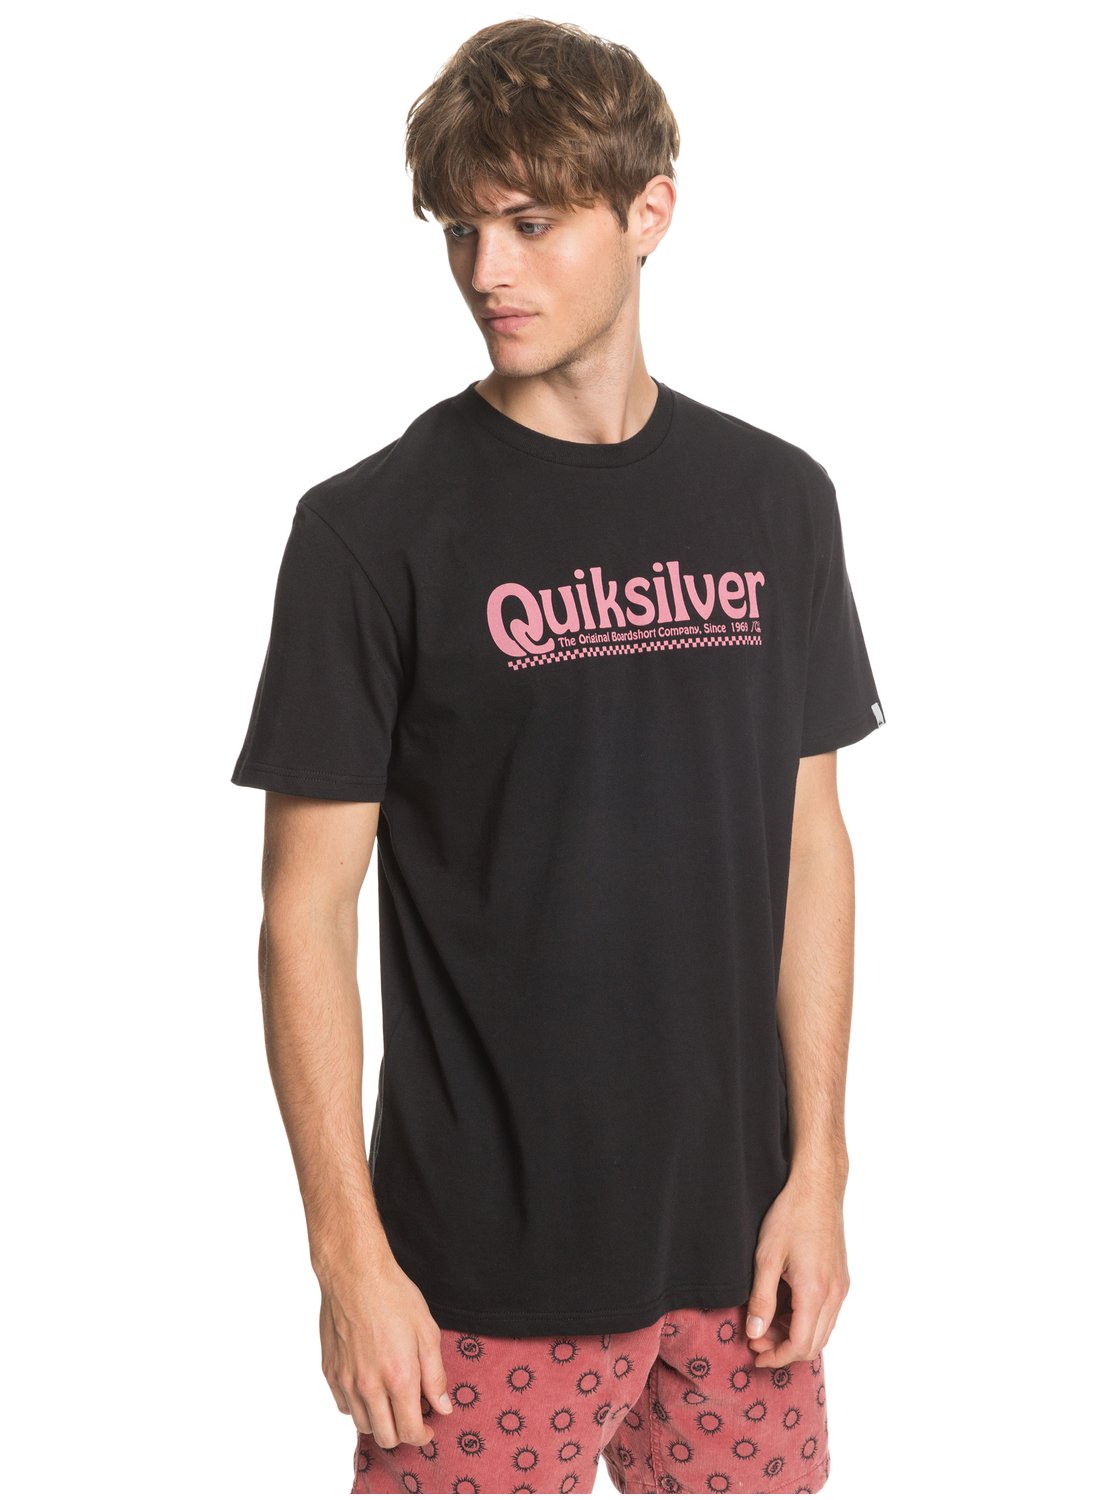 Quiksilver T-Shirt »New Slang« von Quiksilver